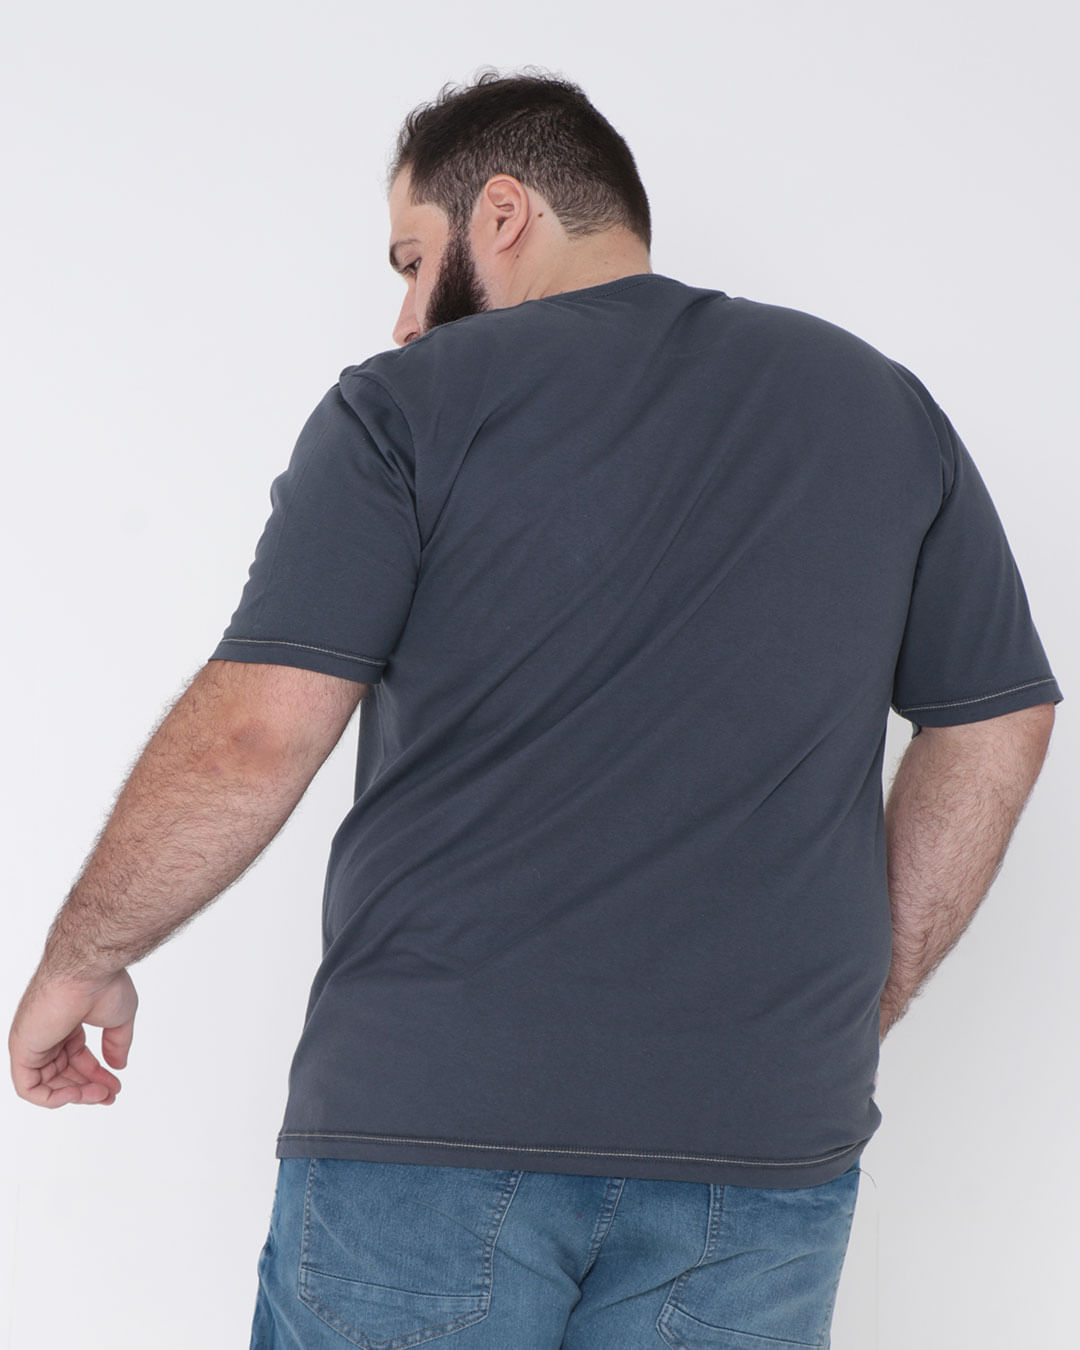 Camiseta-Masculina-Plus-Size-Estampa-Opala-Preta